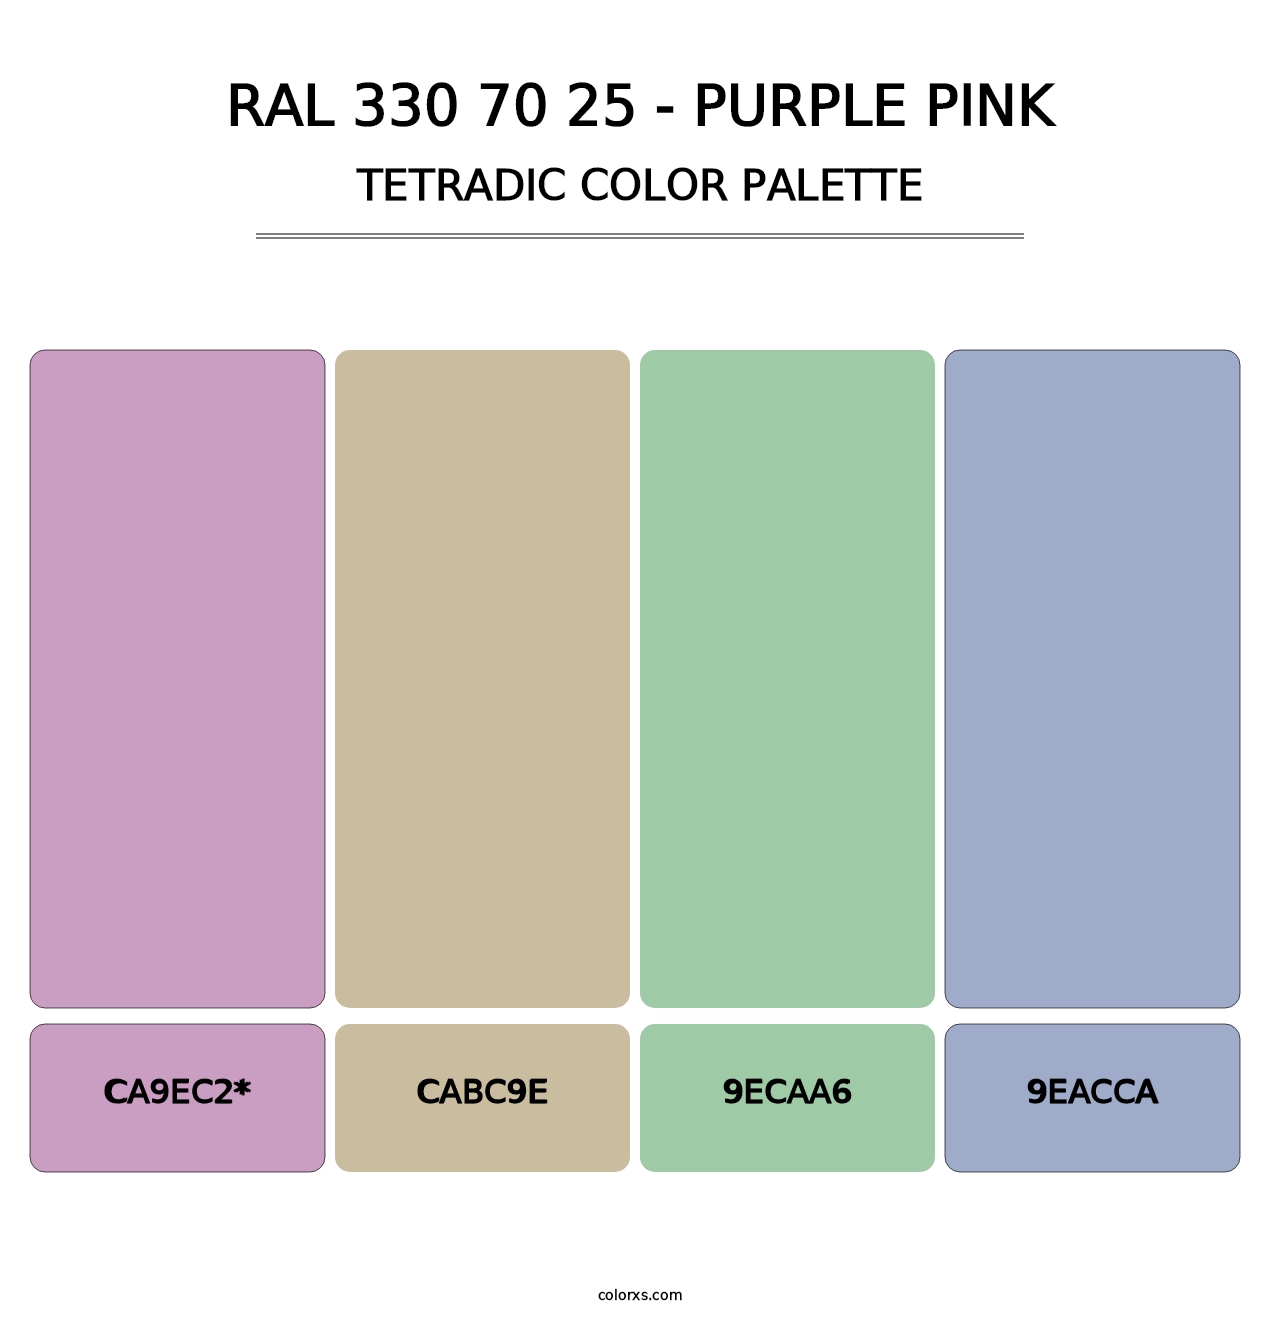 RAL 330 70 25 - Purple Pink - Tetradic Color Palette